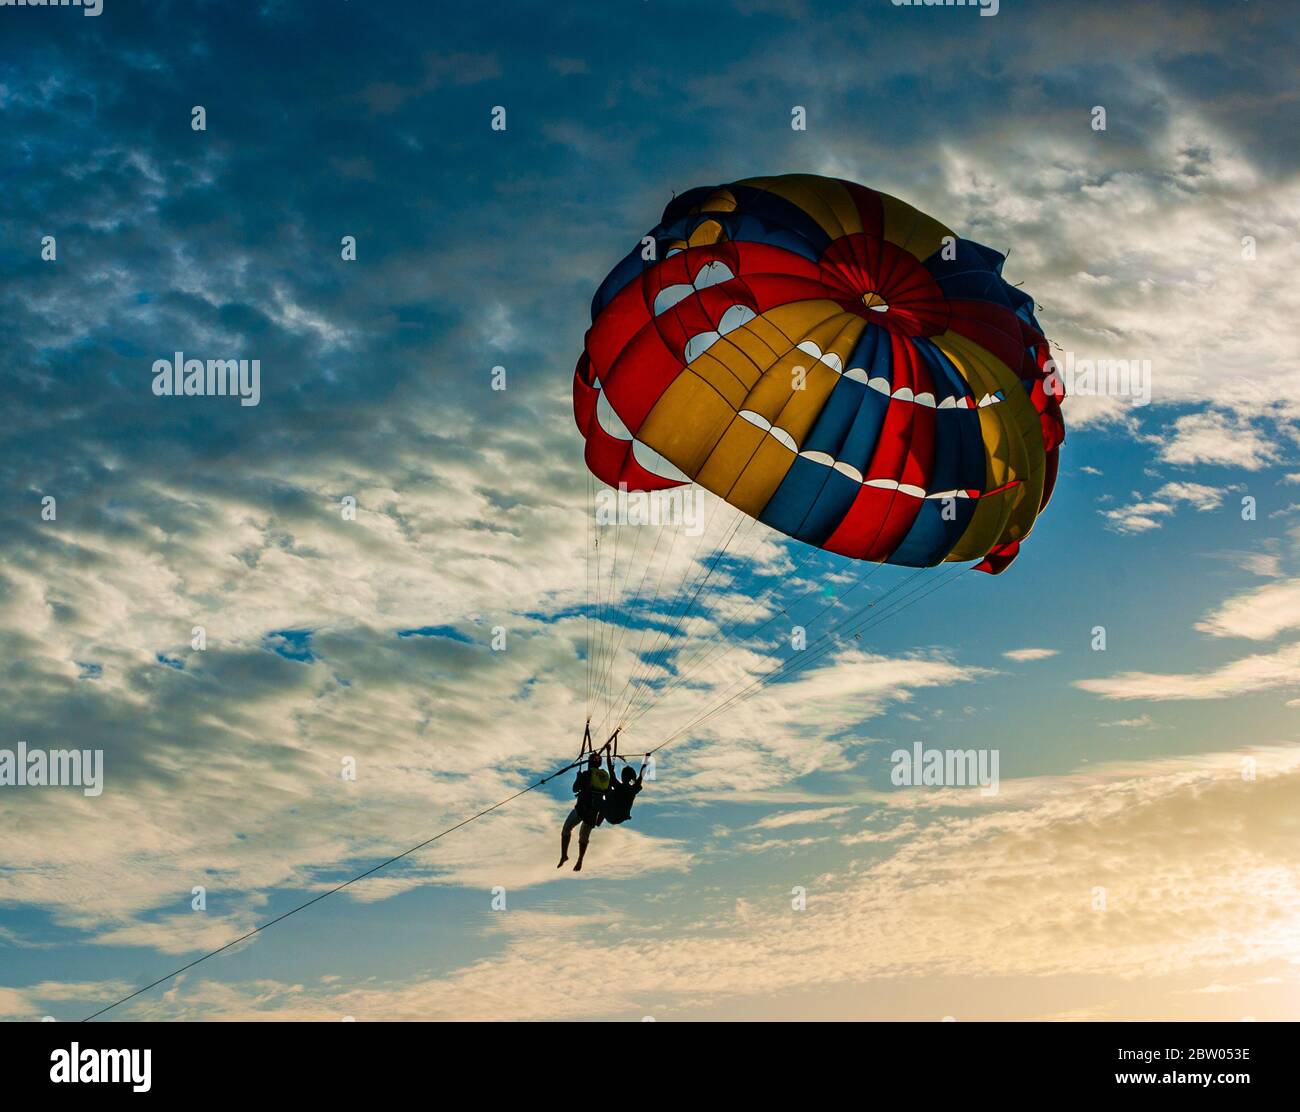 Parachuting ing thr Evening Clouds Stock Photo